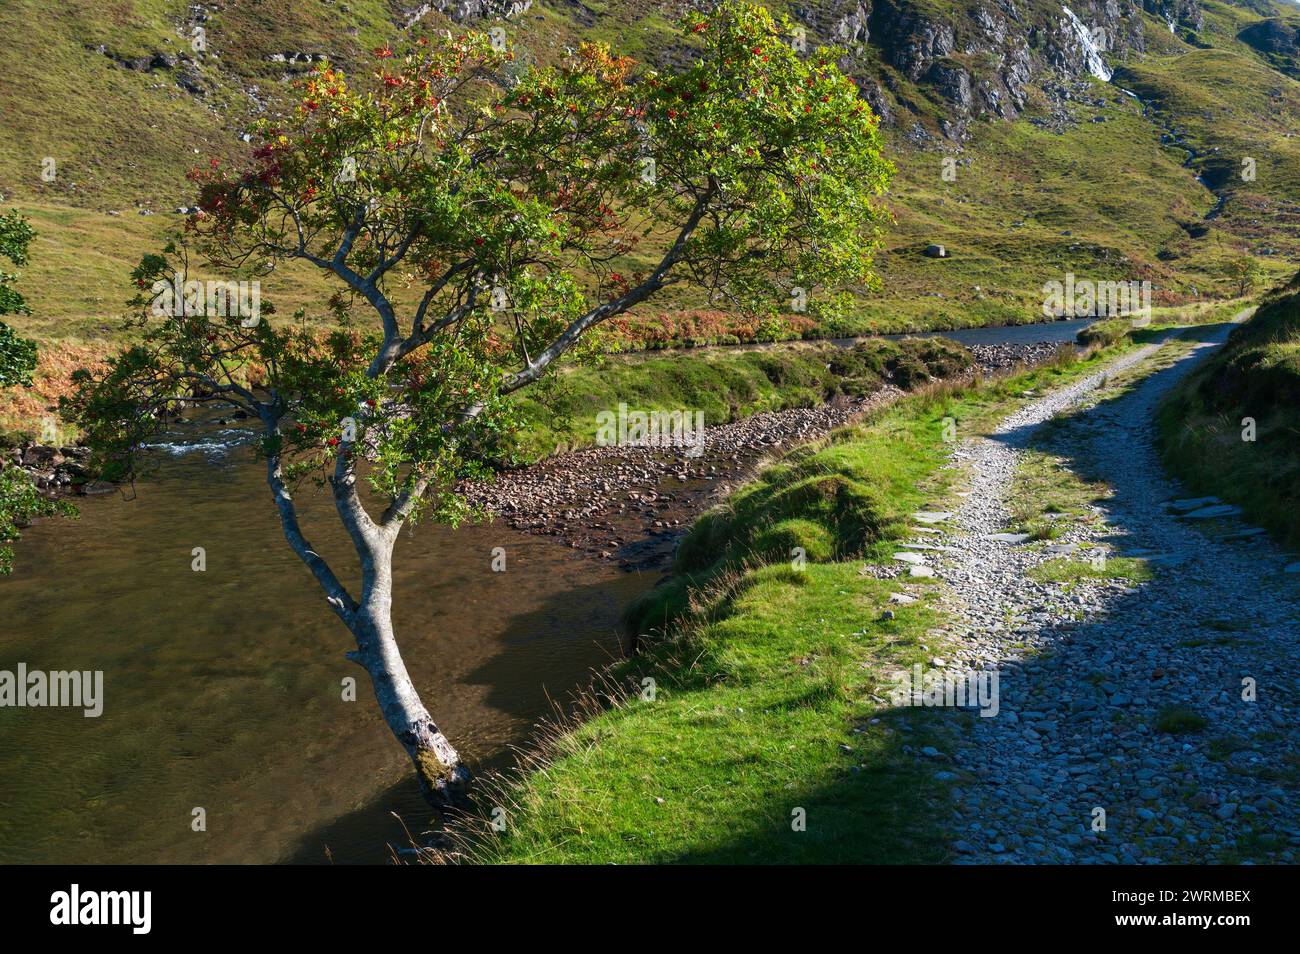 Track alongside the River Croe in Glenlicht, Kintail, Scotland. Stock Photo